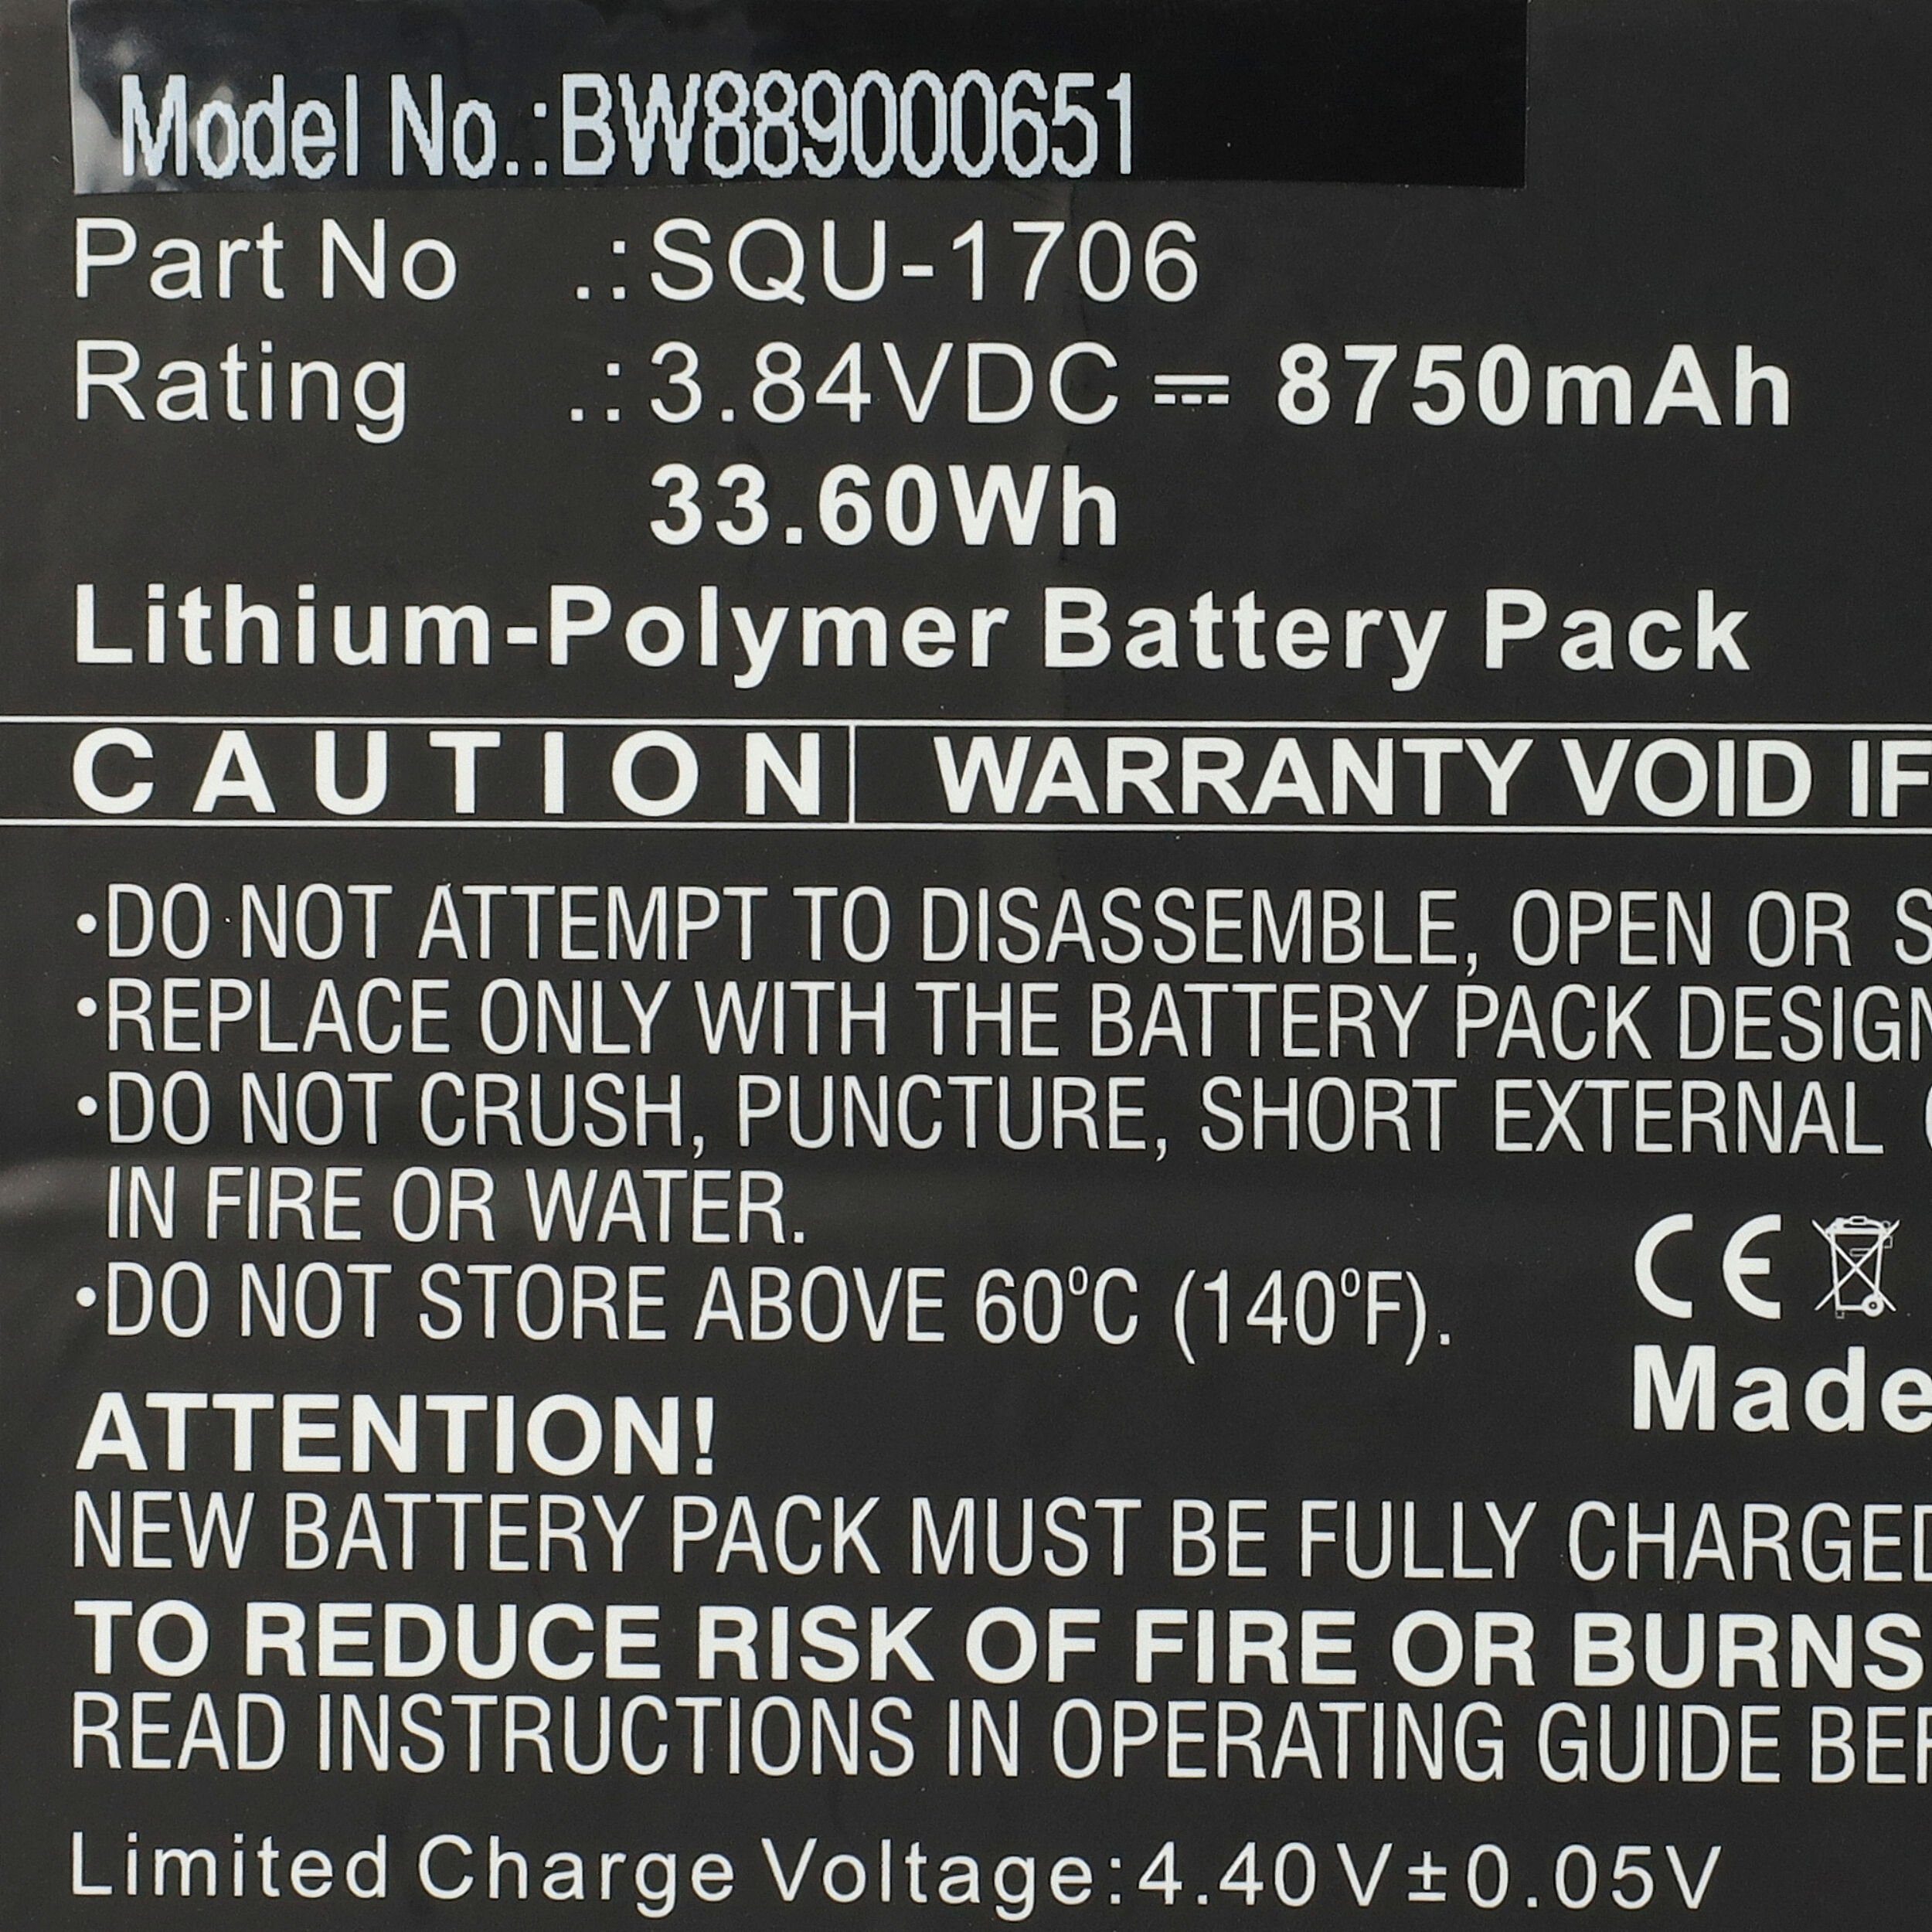 vhbw Ersatz für Acer mAh Li-Polymer V) SQU-1706, 8750 (3,84 für KT.00201.004 Tablet-Akku